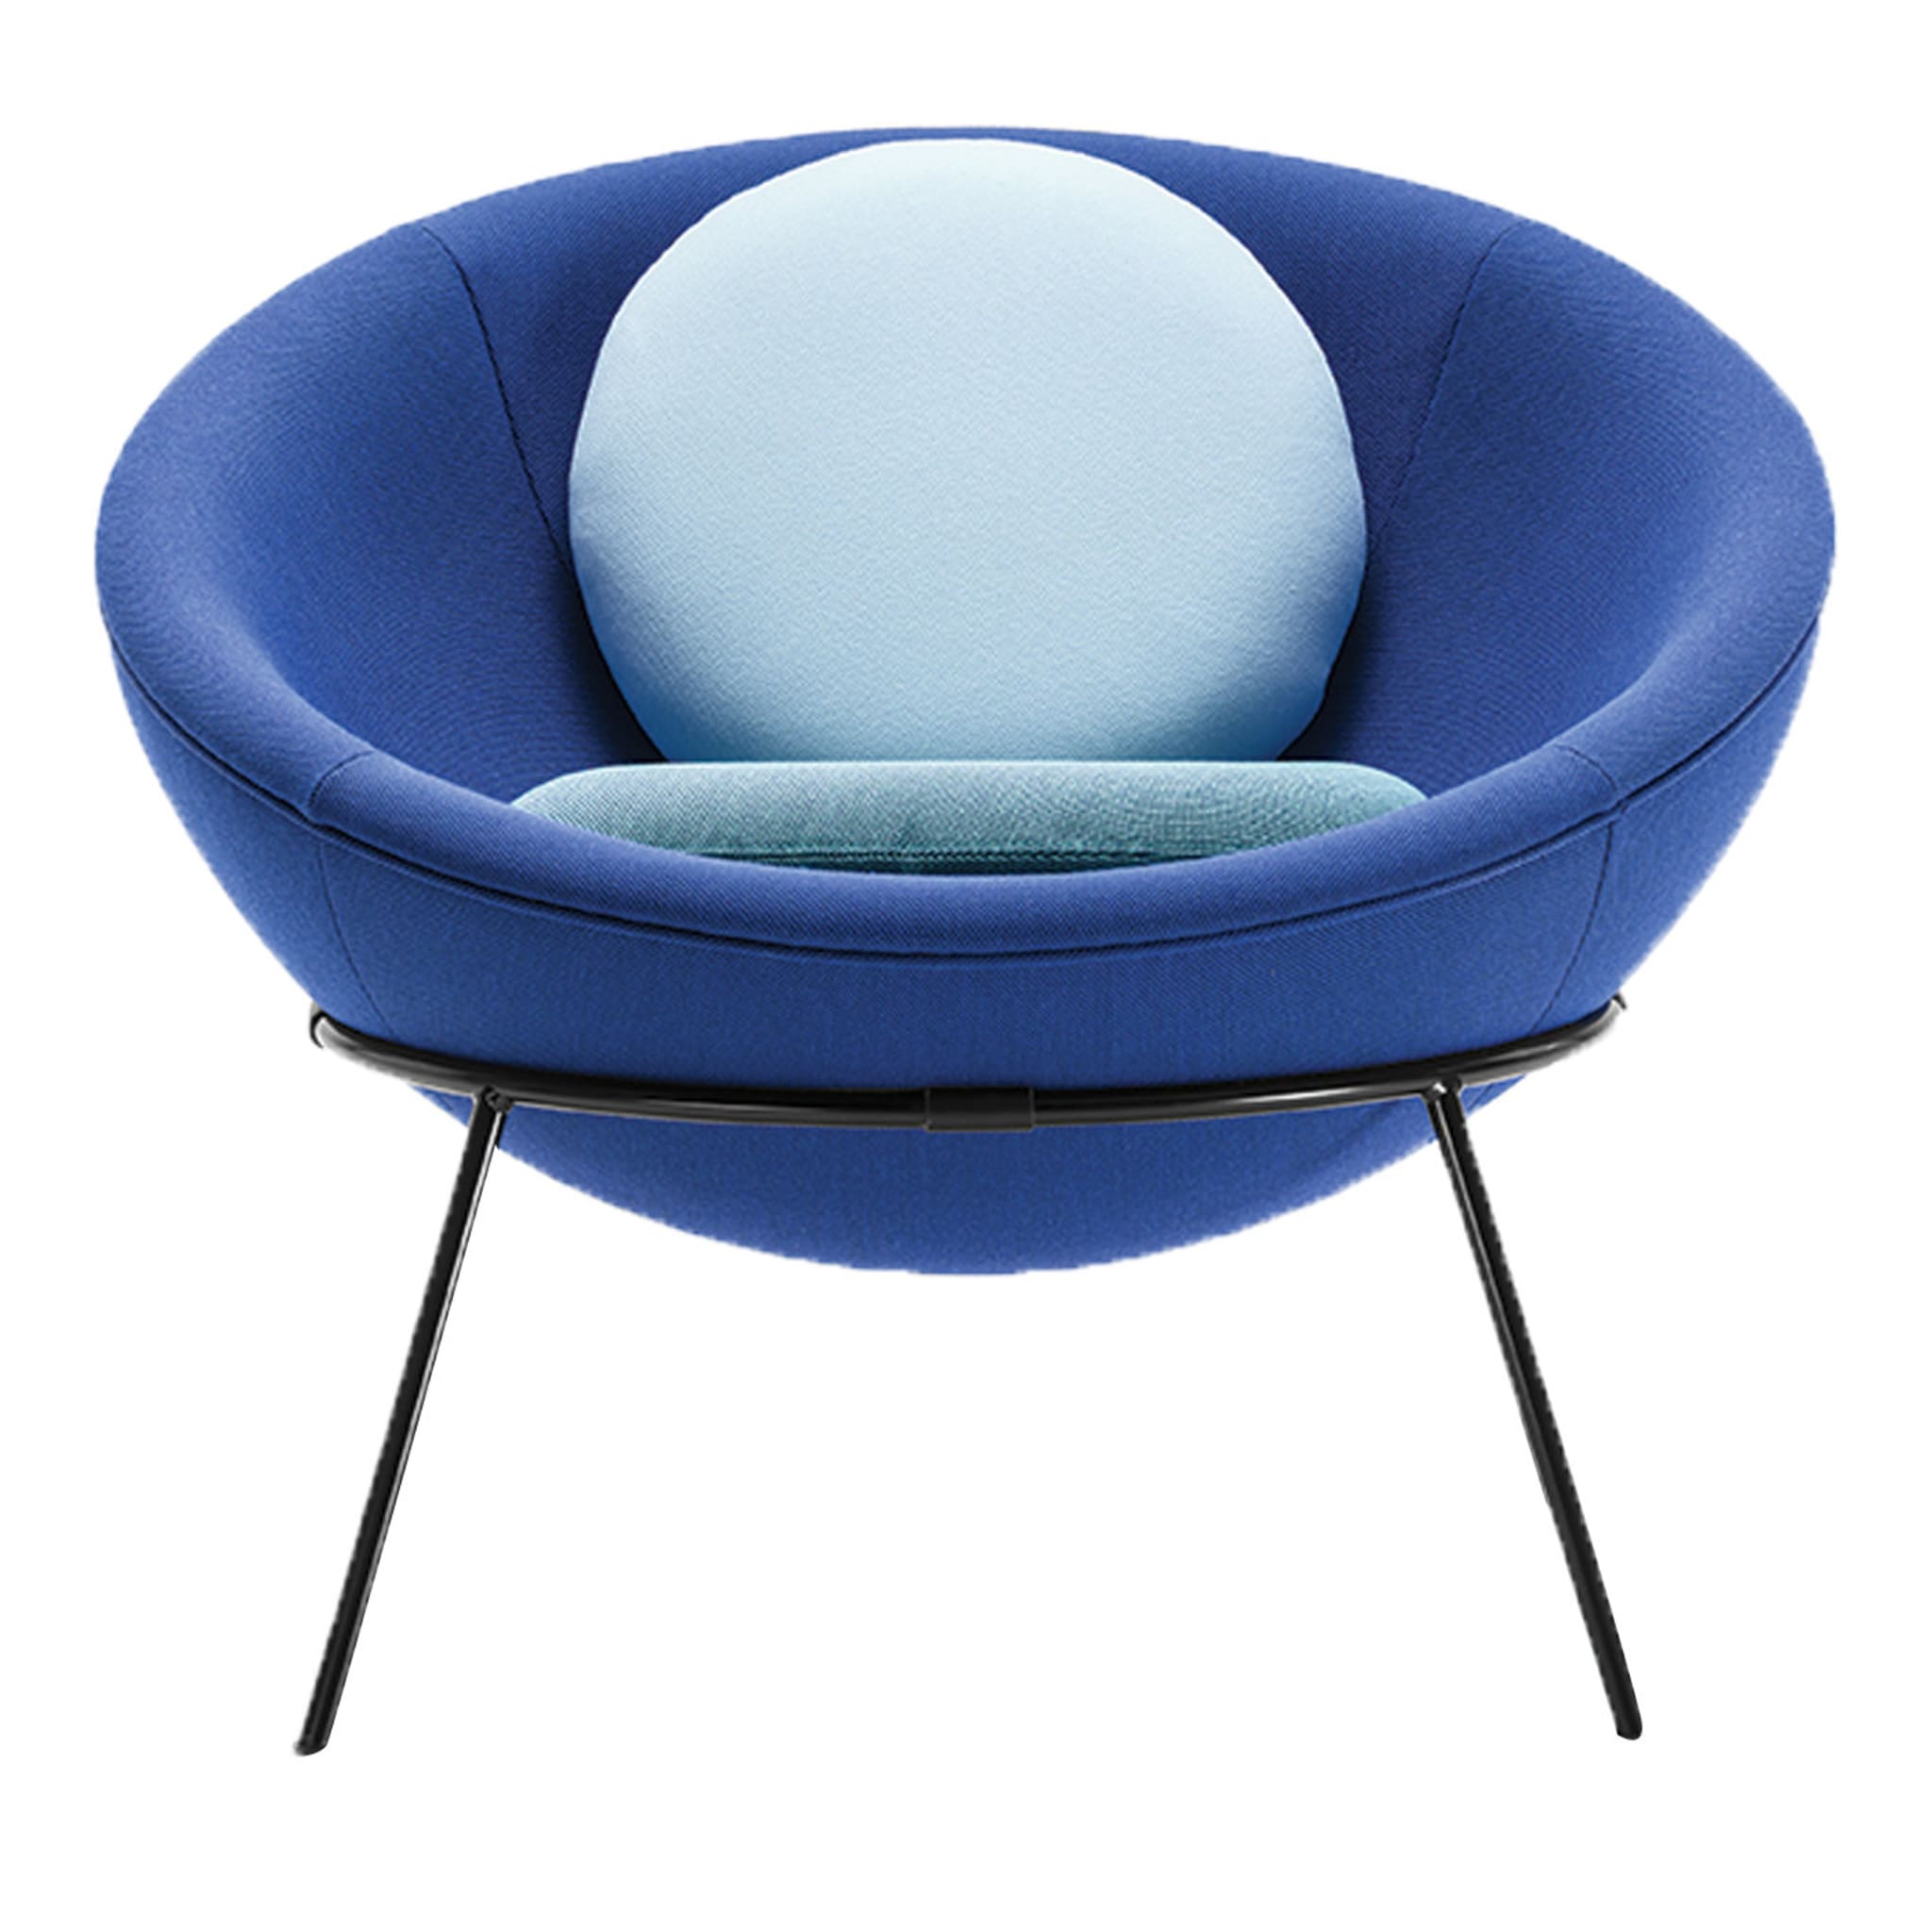 Bardi's Bowl Chair Shiny Blue Nuance - Main view